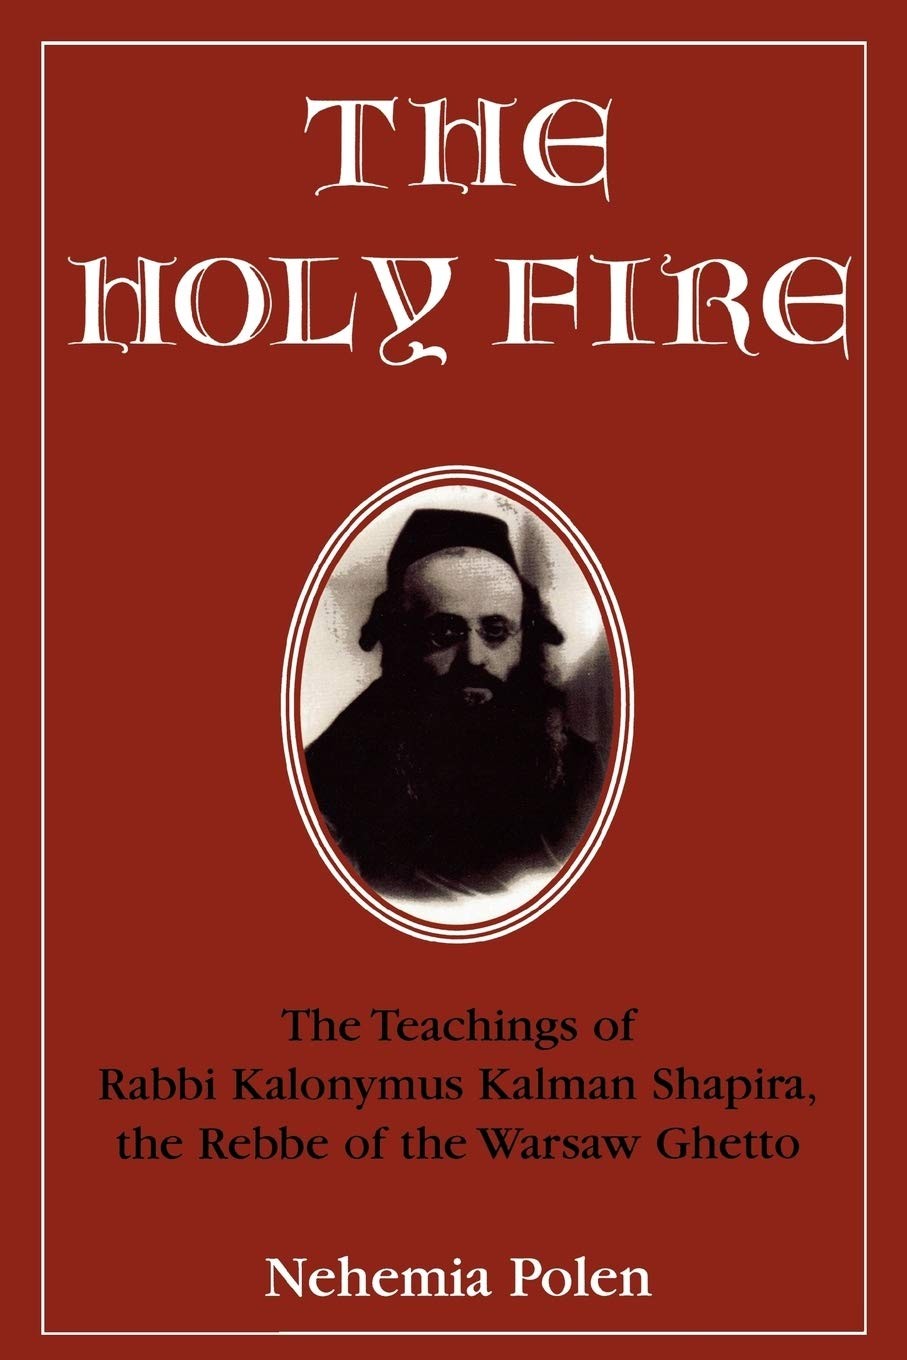 The Holy Fire: The Teachings of Rabbi Kalonymus Kalman Shapira, 